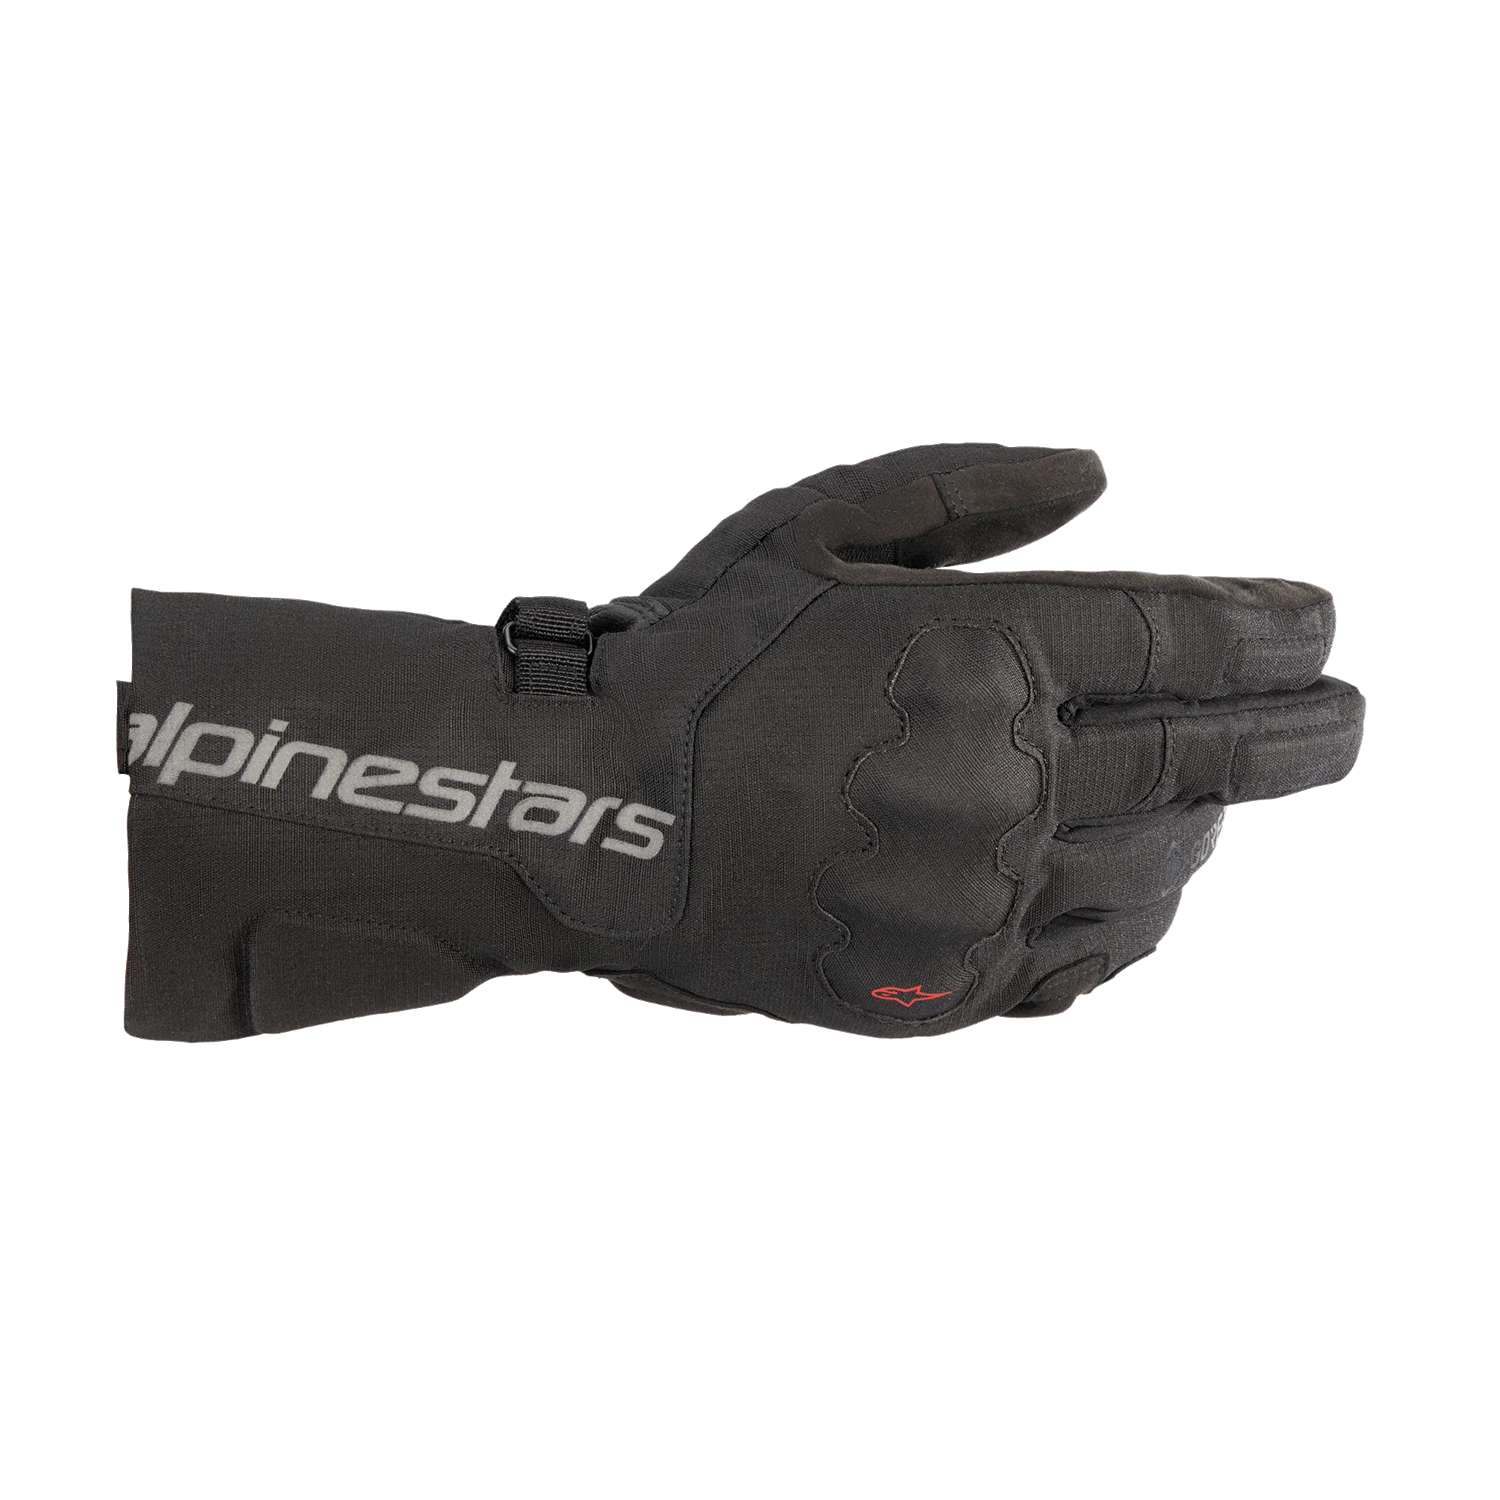 Image of Alpinestars Wr-X Gore-Tex Gloves Black Size M ID 8059347243634